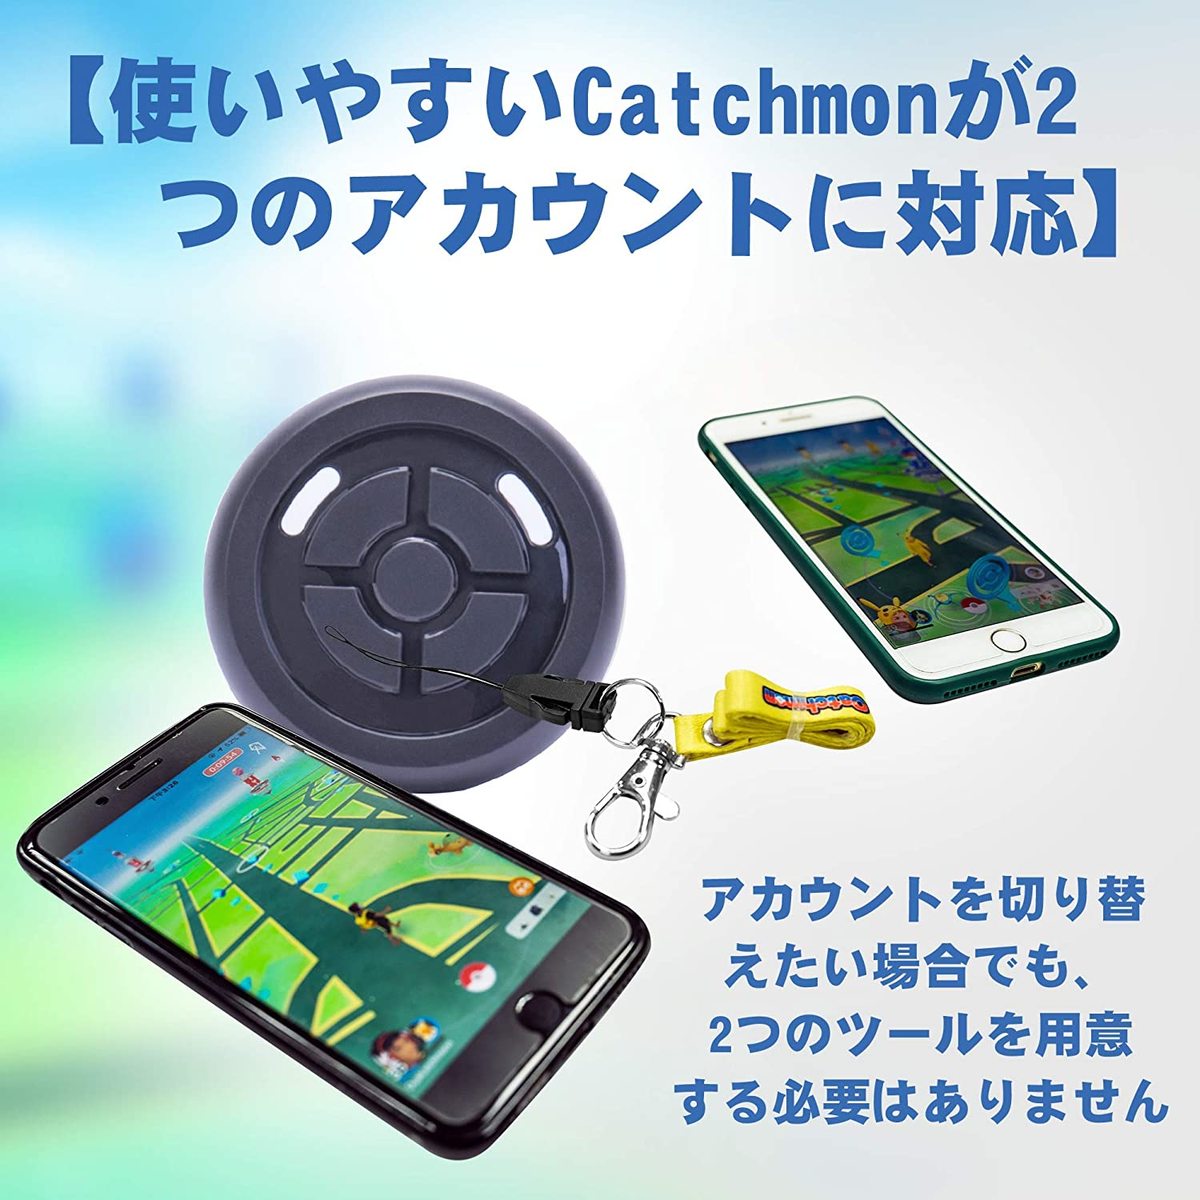 Megacom Pocket Dual Catchmon ポケモンgo 用 デュアルキャッチモン オートキャッチ 黒 対応ios 11 0 Android 7 日本語パッケージ セット品 正規輸入品 日本語説明書付き Brandingidentitydesign Com